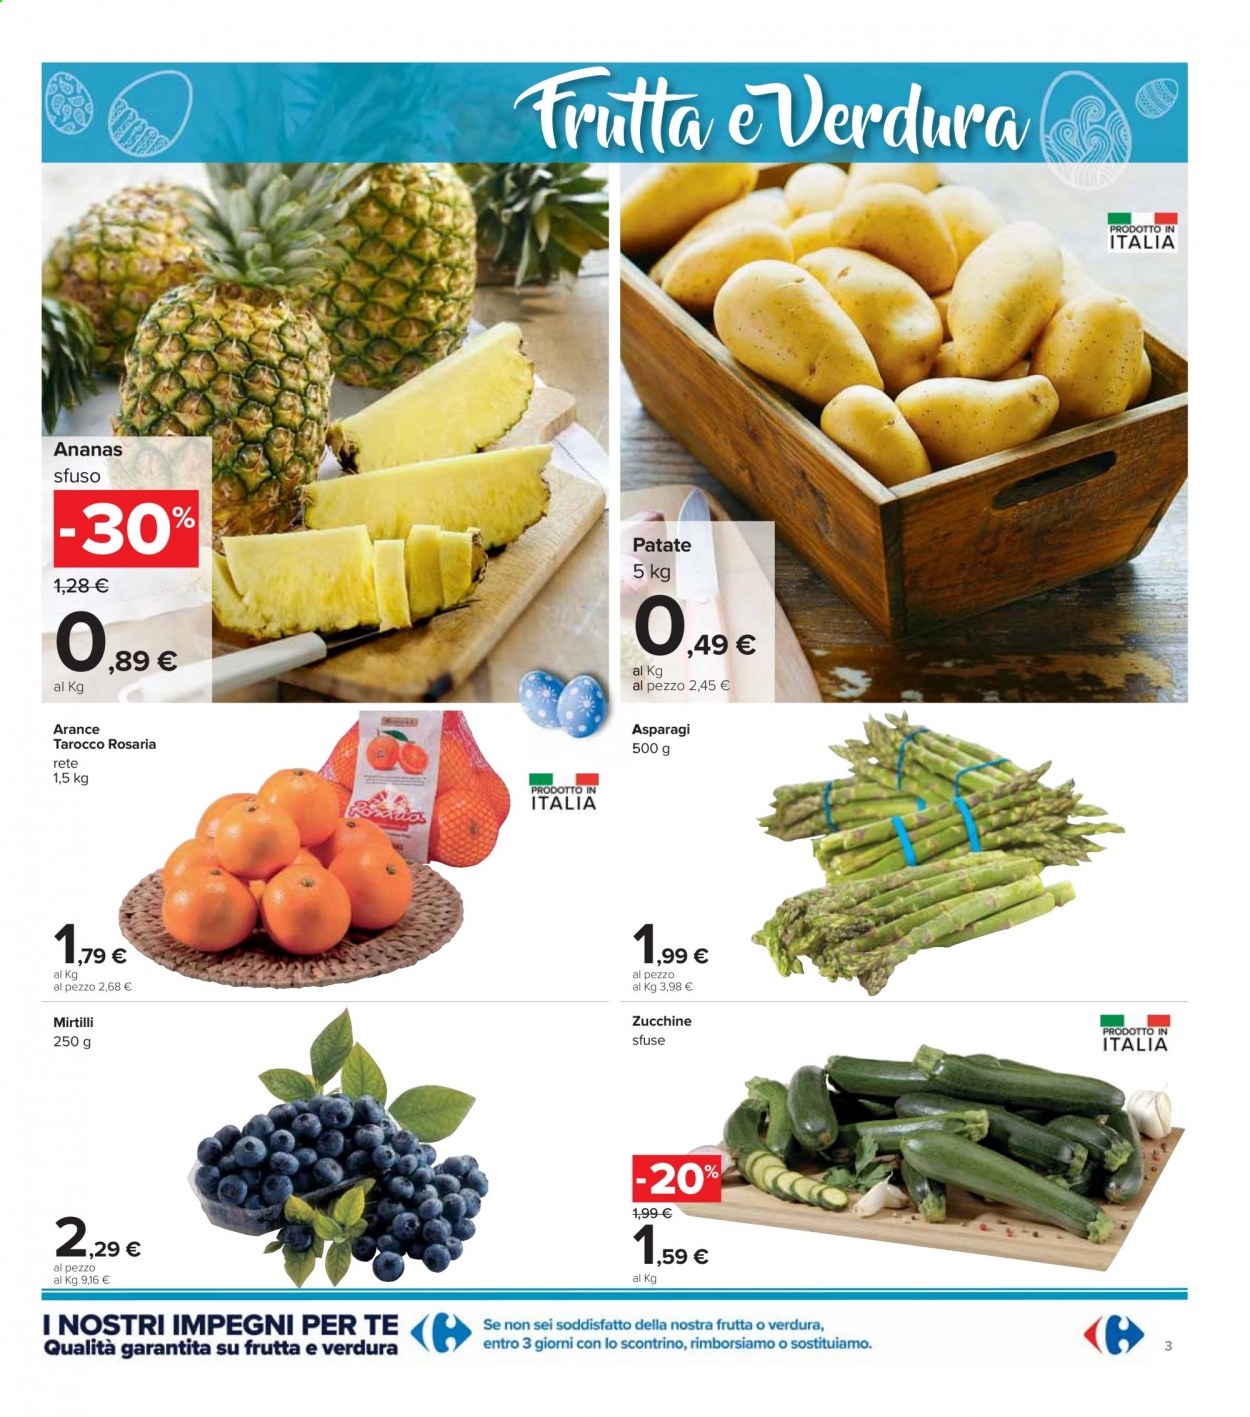 thumbnail - Volantino Carrefour - 29/3/2021 - 5/4/2021 - Prodotti in offerta - patate, zucchine, asparagi, ananas, arance, mirtilli. Pagina 3.